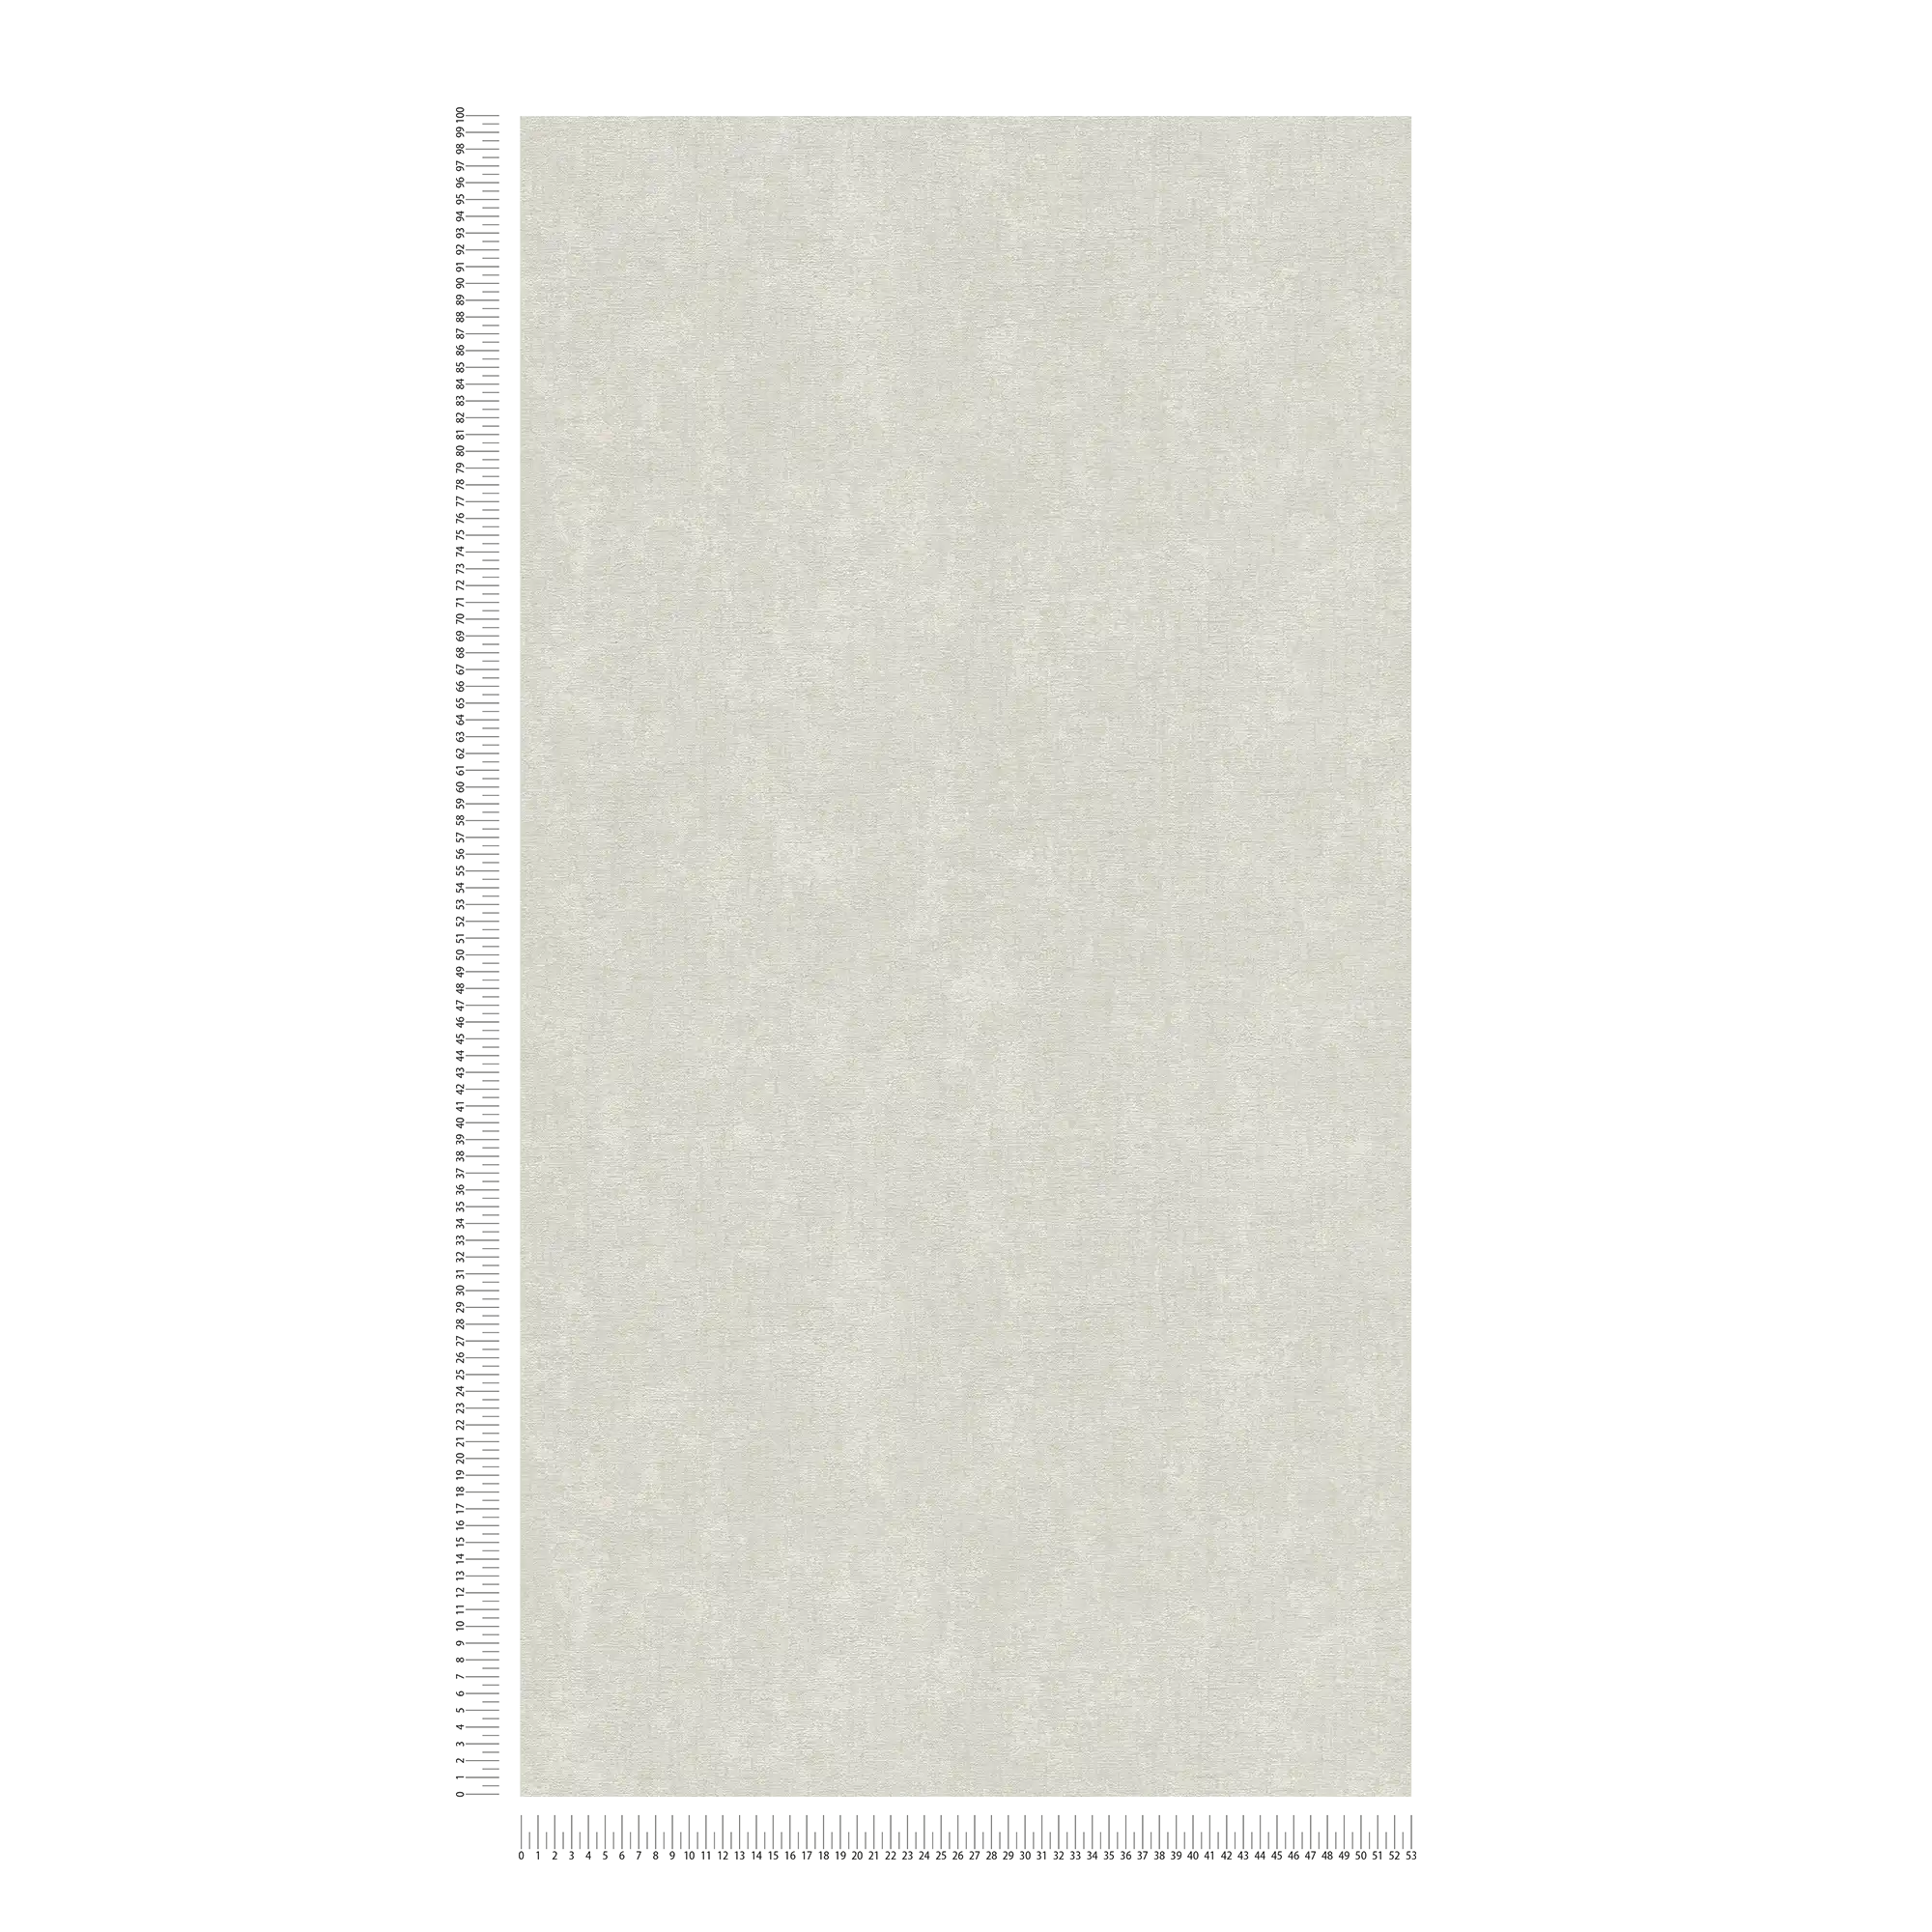             Carta da parati con motivo tessile tinta unita - grigio chiaro
        